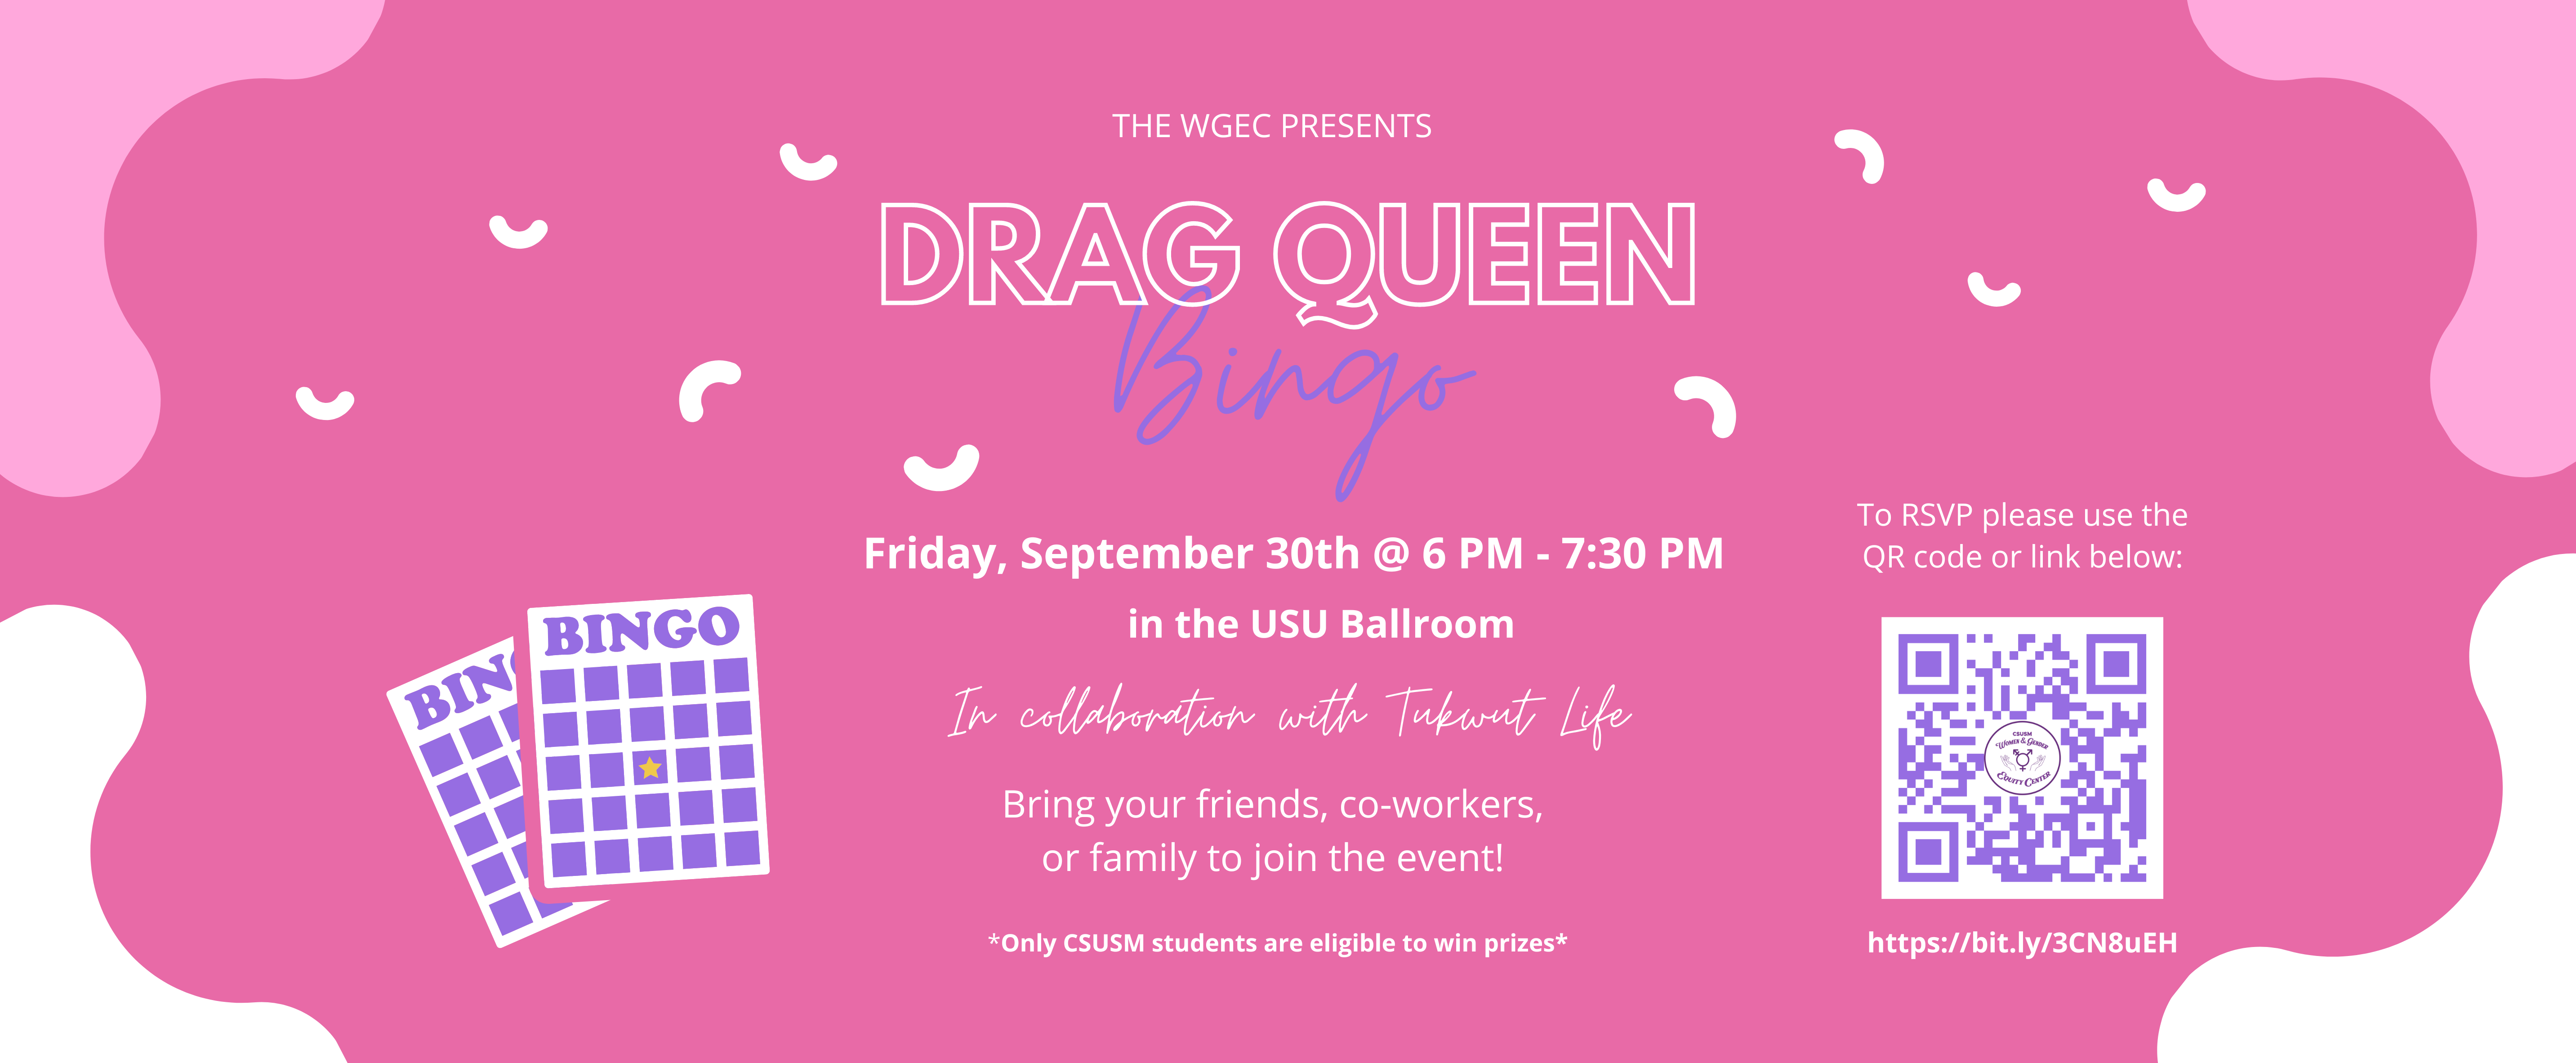 Drag Queen Bingo | A Tukwut Life Event - Friday, September 30, 2022 - 6:00pm to 7:30pm - University Student Union Ballroom